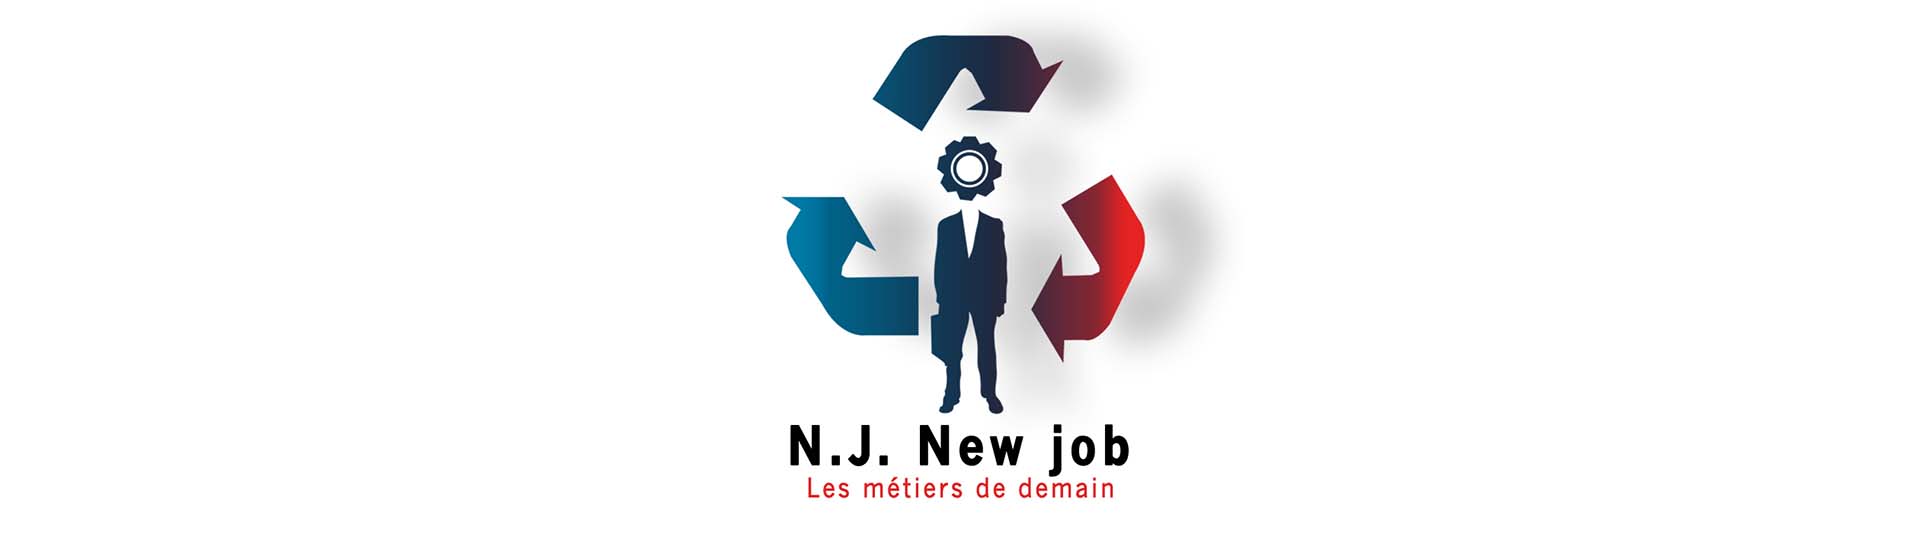 N.J (New Job)